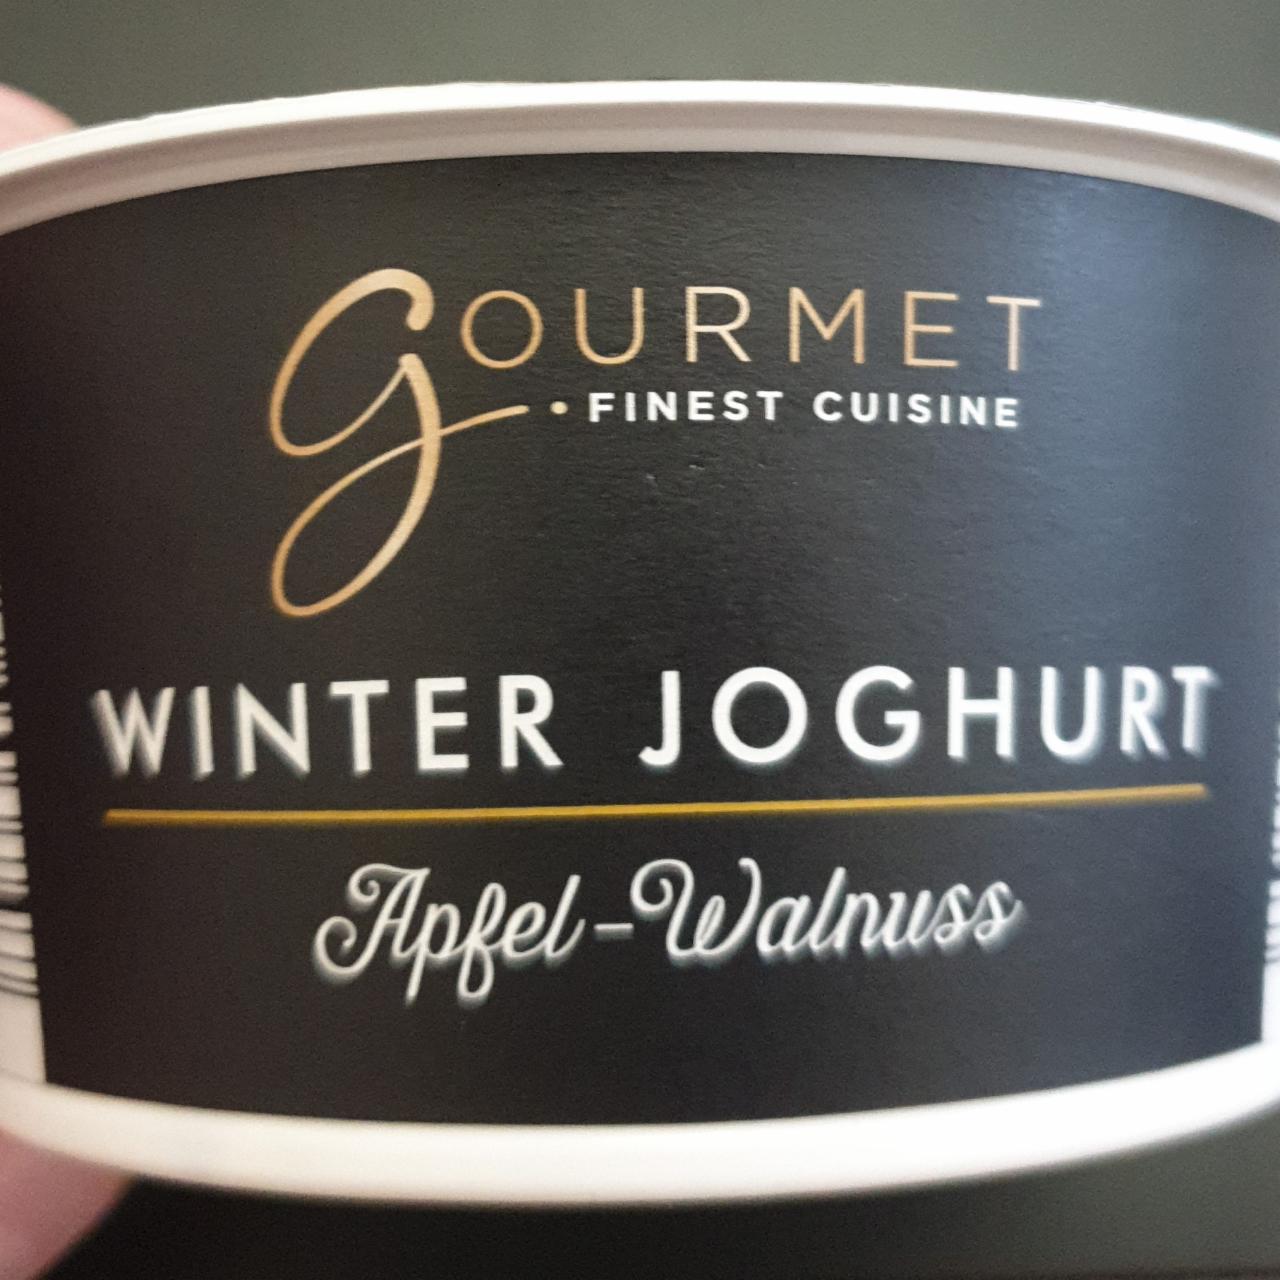 Fotografie - Winter Joghurt Apfel Walnuss Gourmet finest cuisine